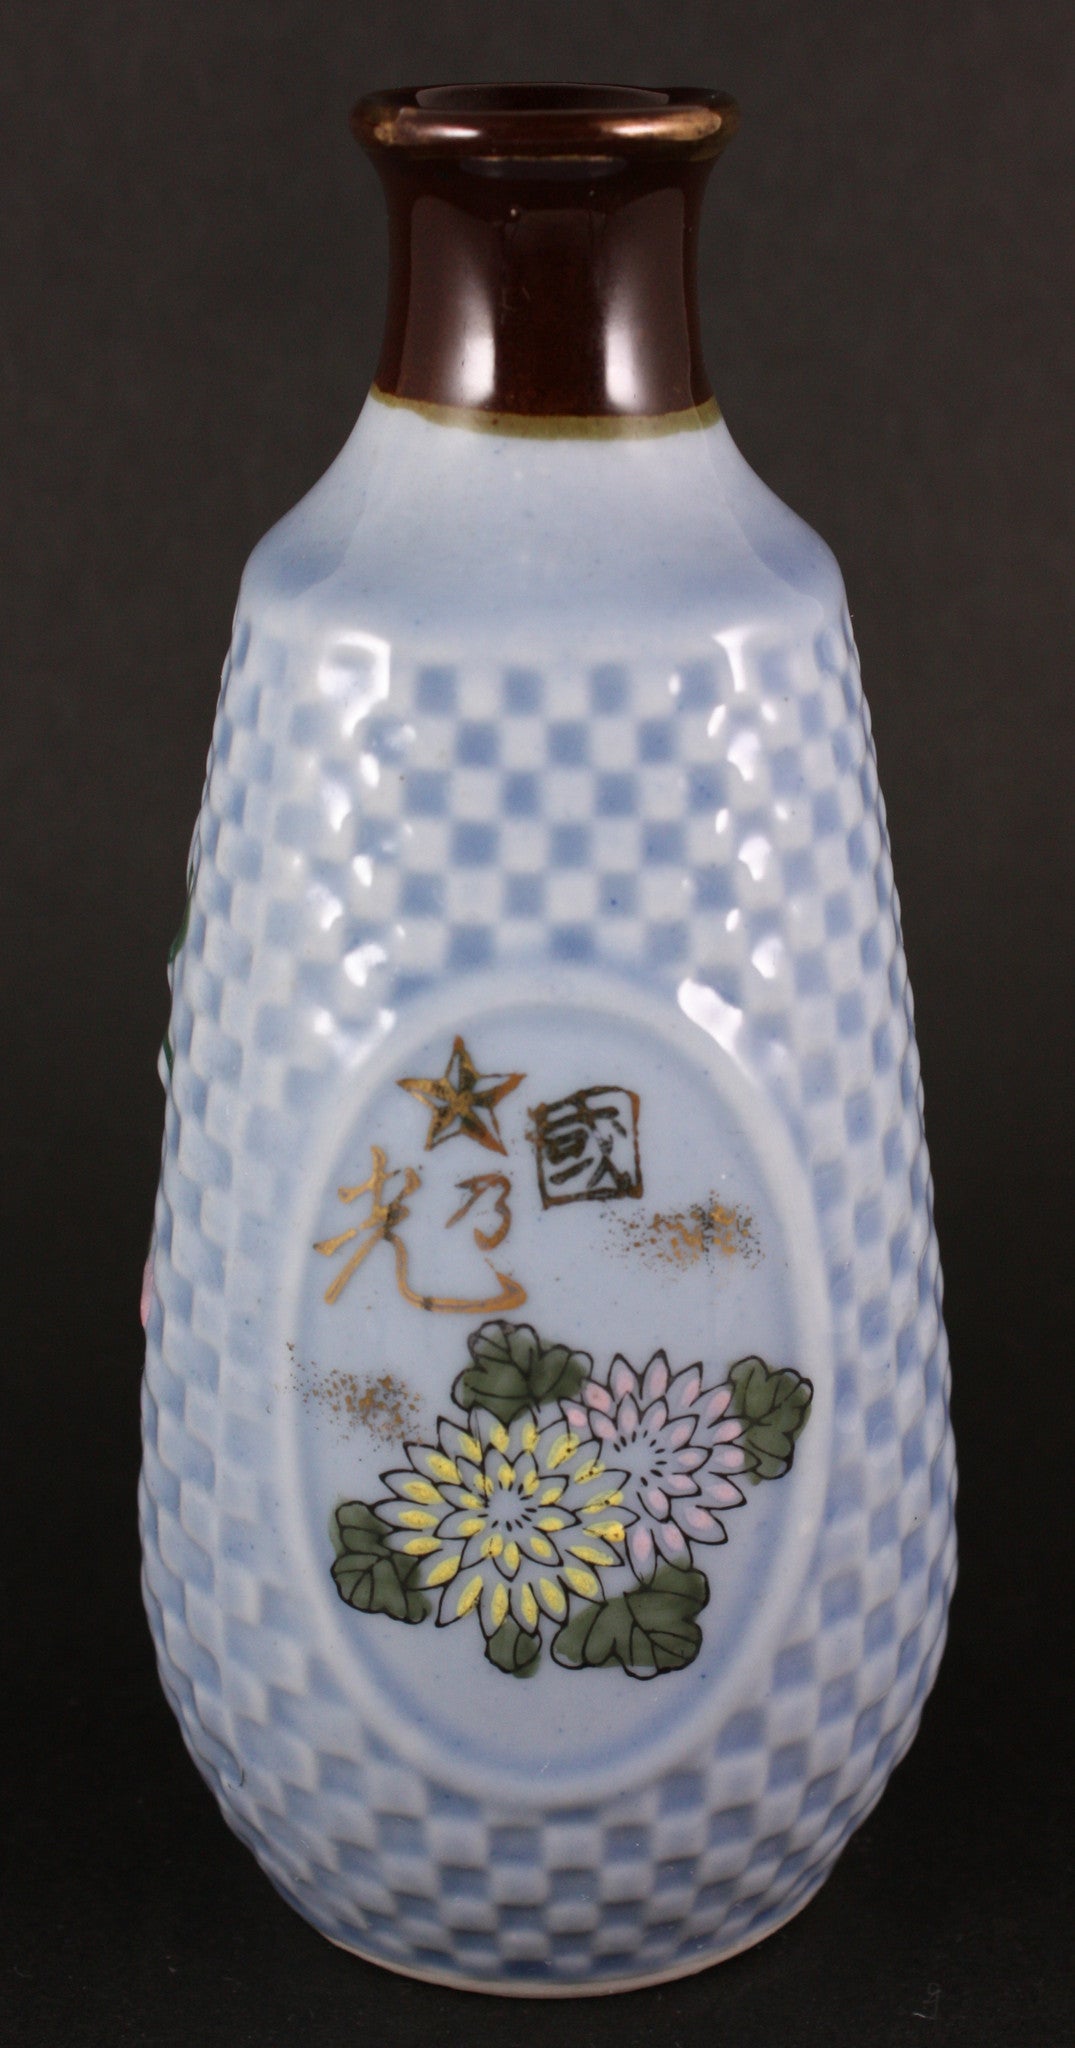 Antique Japanese Glory to the Nation Army Sake Bottle